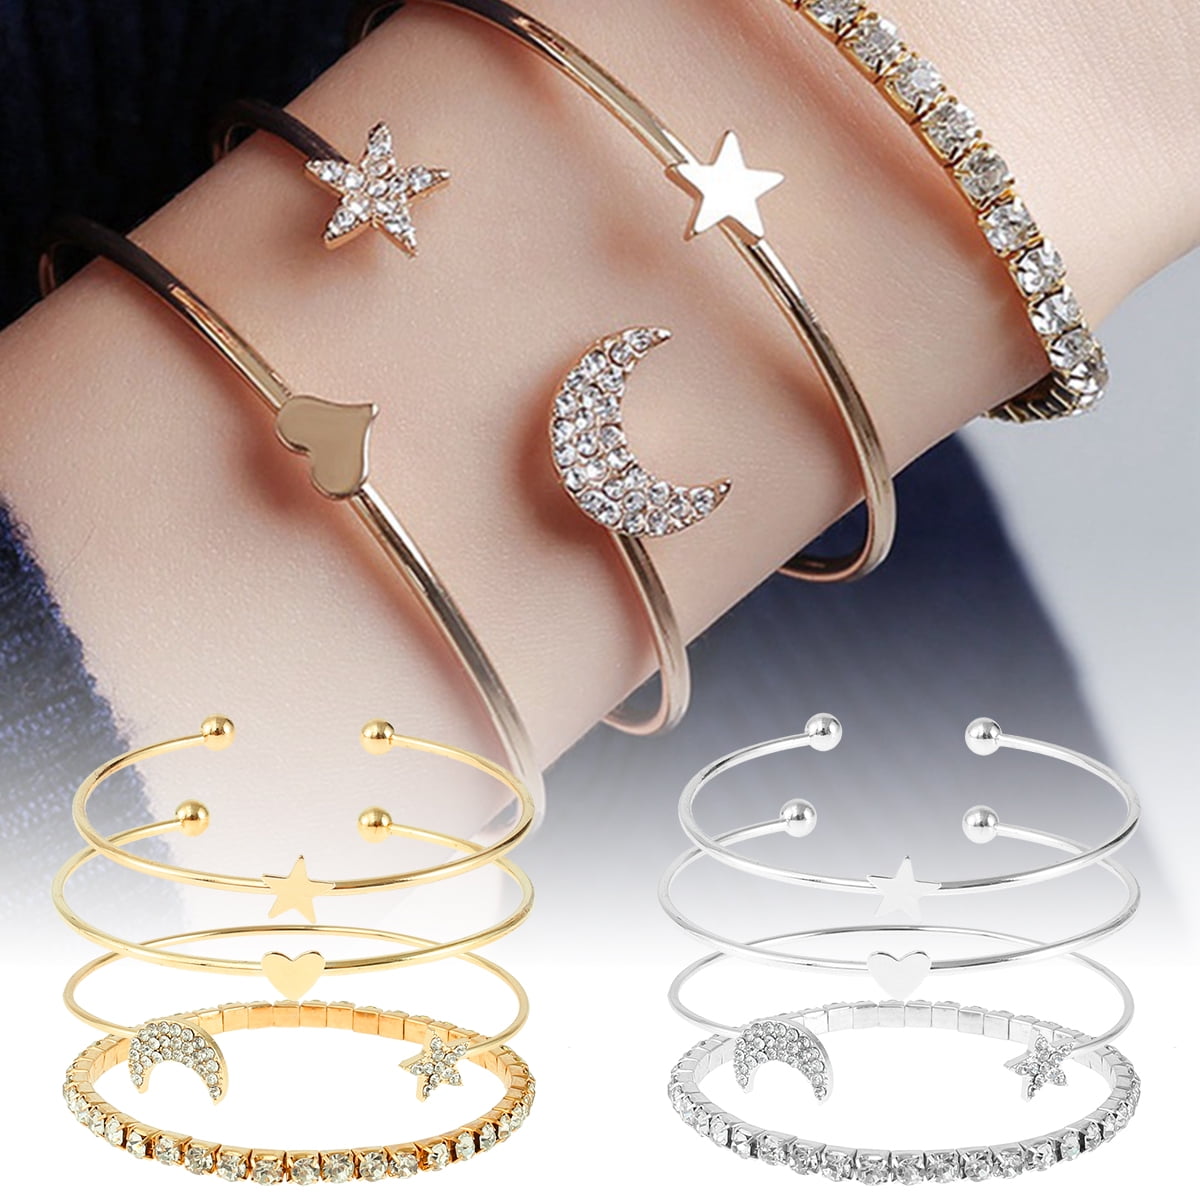 Layer Wristband Accessories Women Bangle Twist Scrub Cuff Bracelet Jewelry